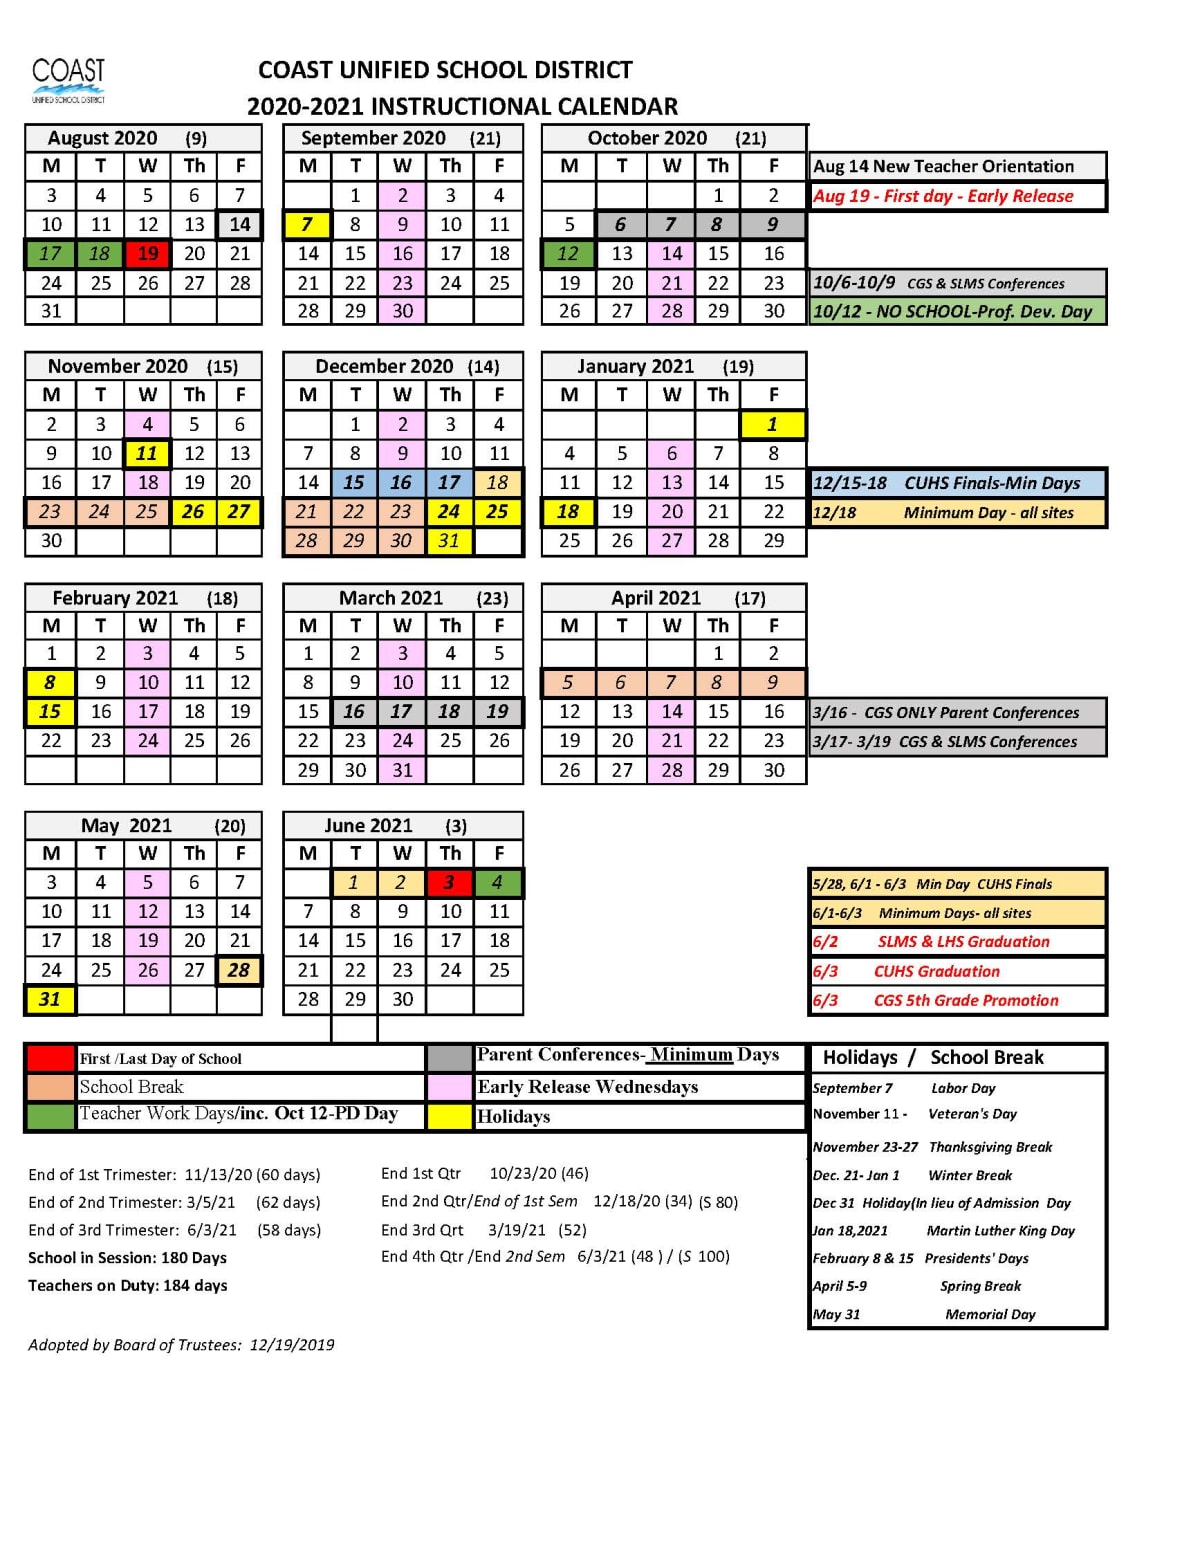 Coast Unified School District Calendar 2021 and 2022 PublicHolidays.us